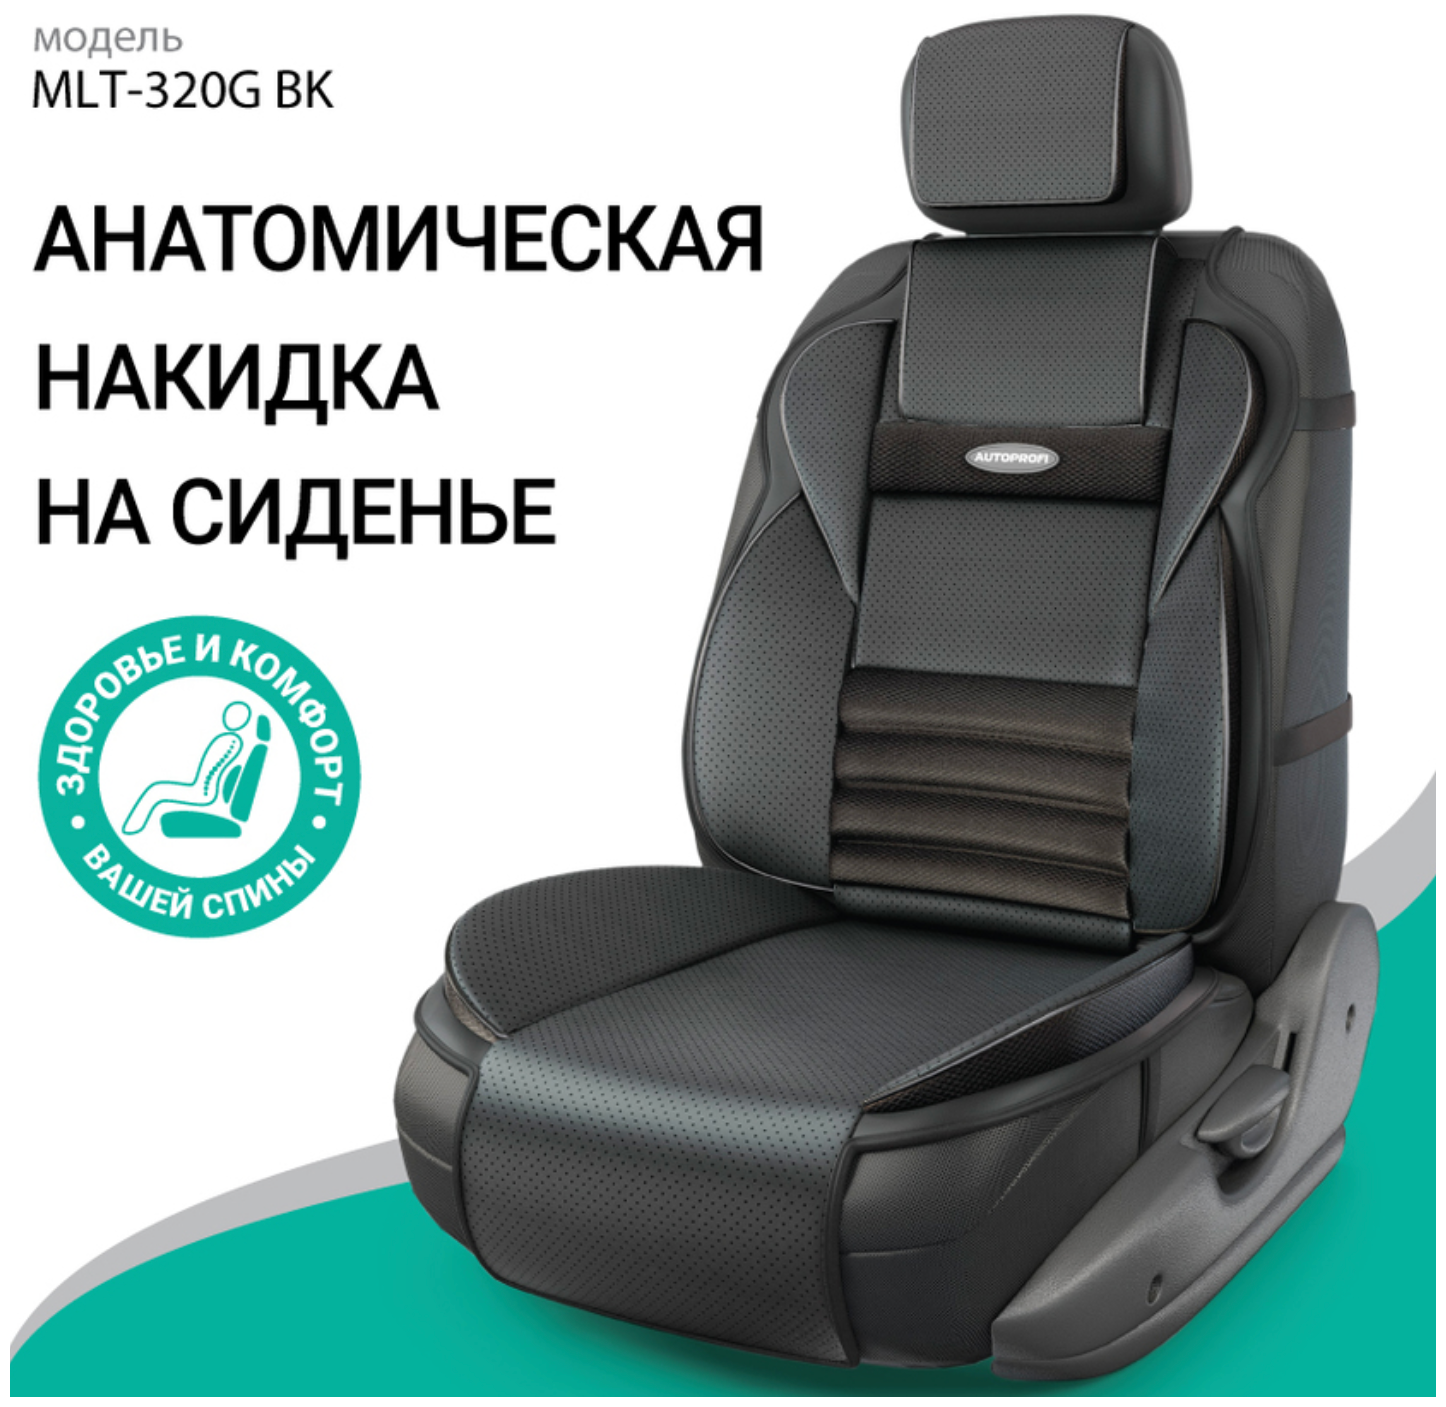 Накидка на сиденье "AUTOPROFI" Multi Comfort черная экокожа MLT-320G BK